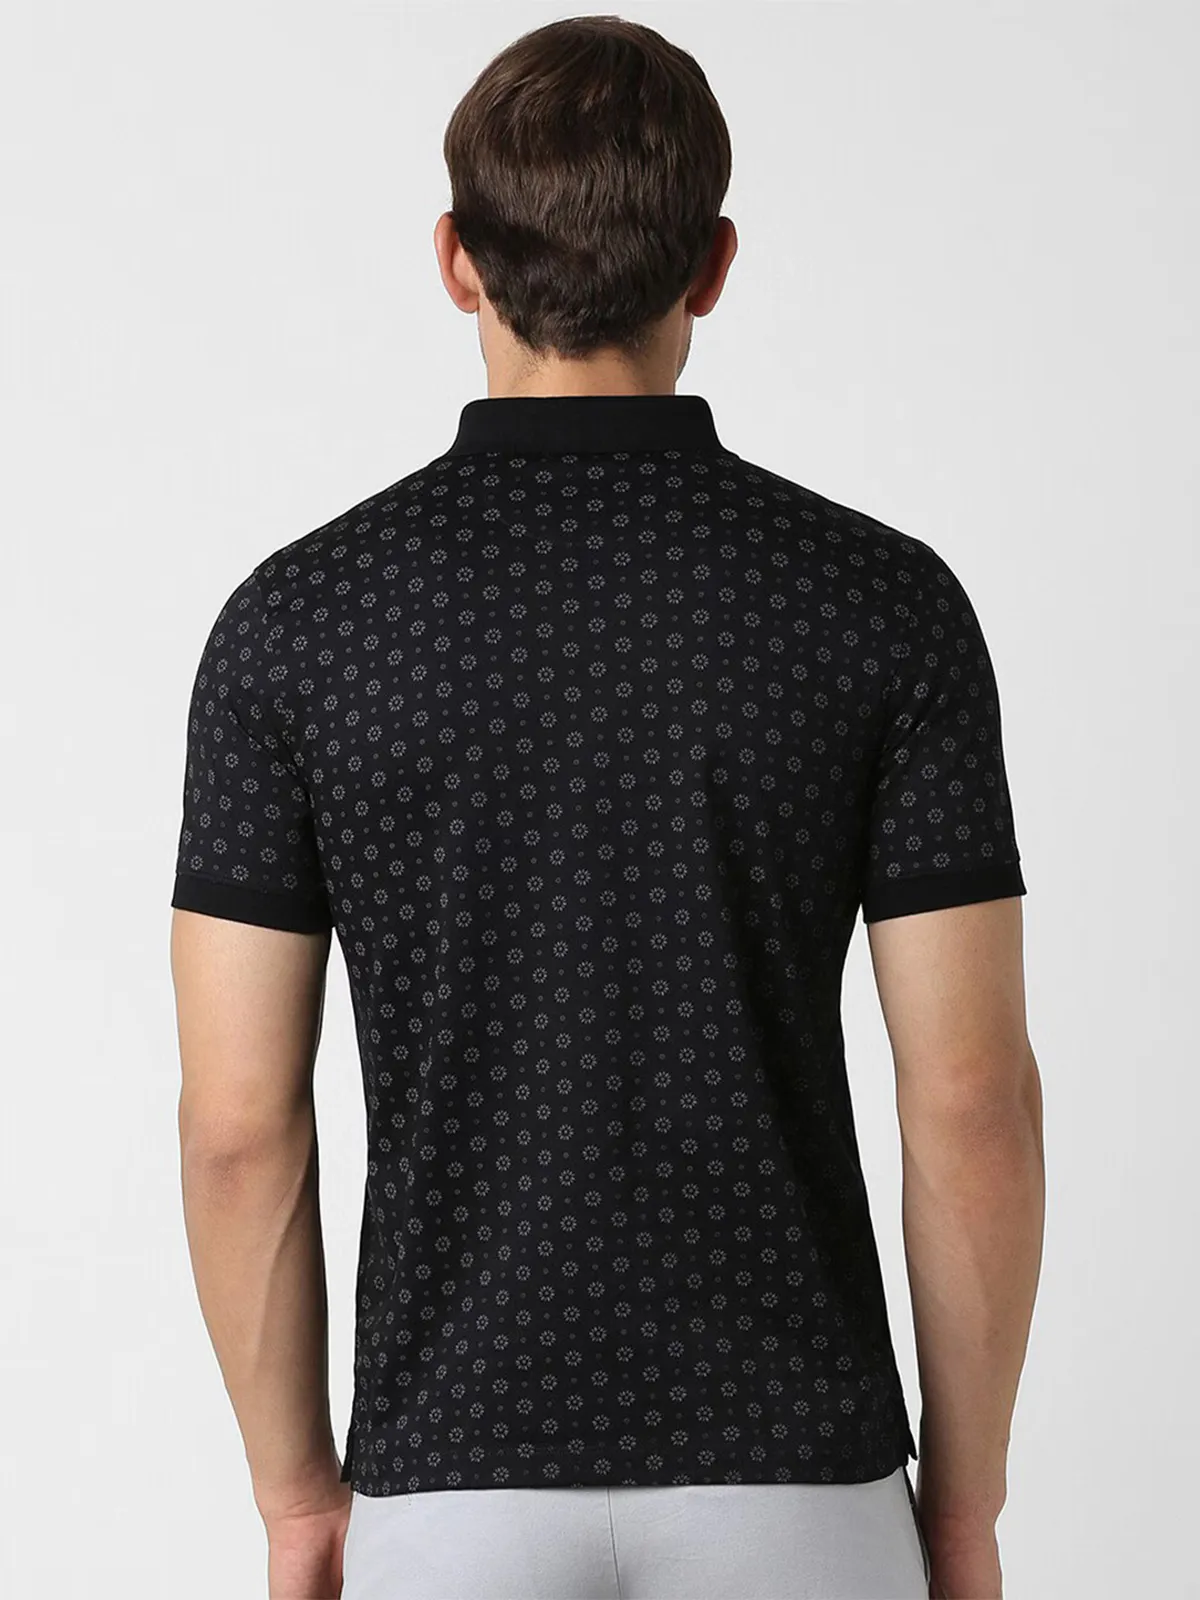 VAN HEUSEN black cotton printed polo t-shirt